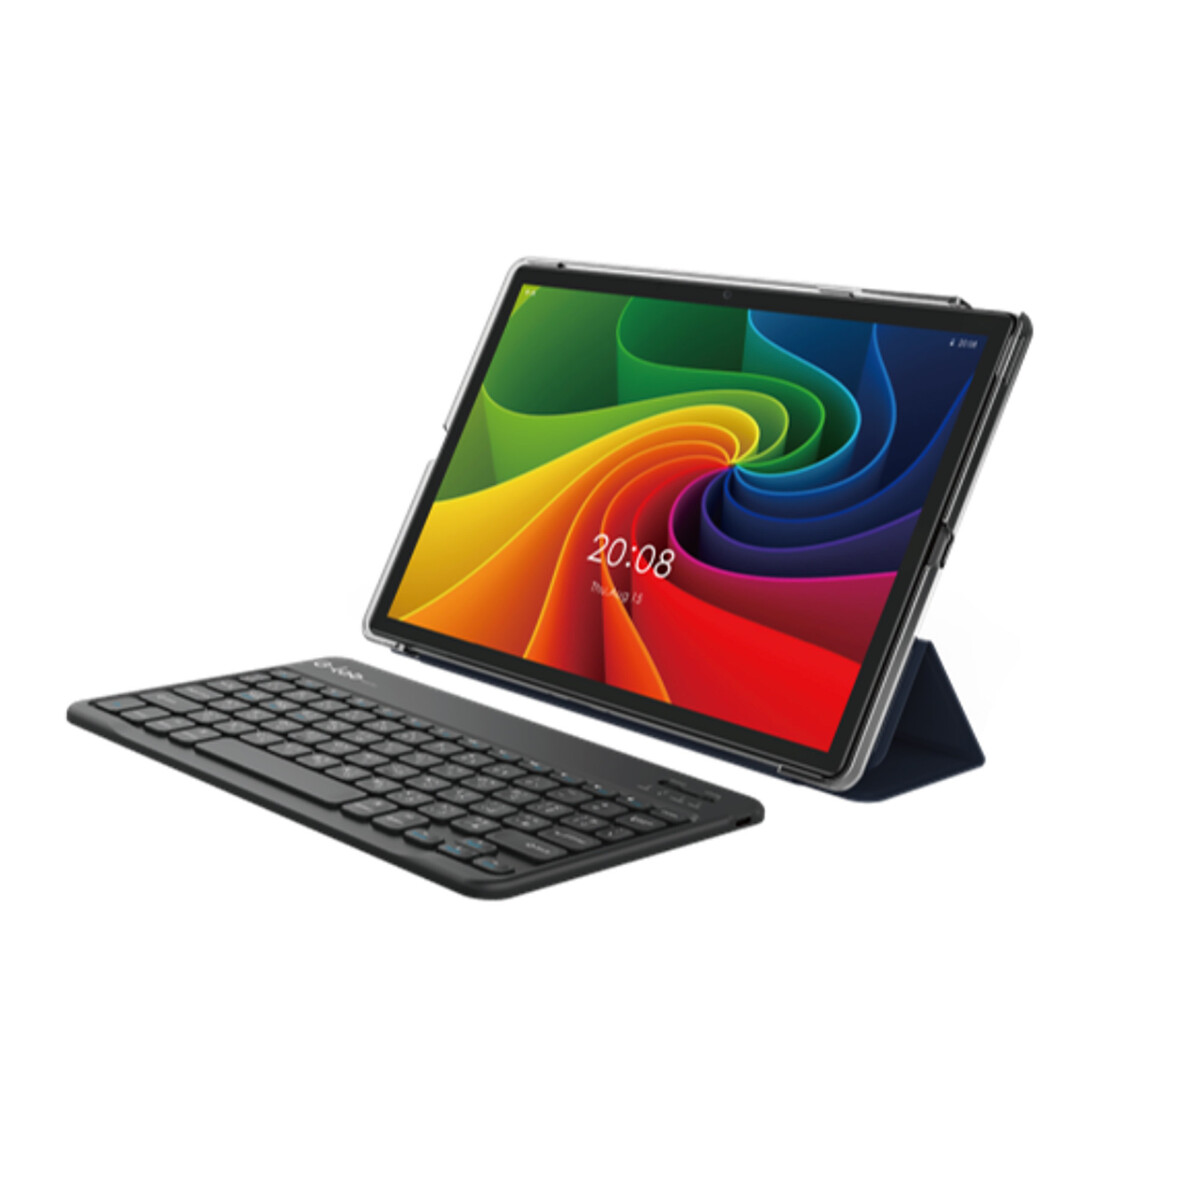 Gtab Tablet S12 2GB RAM,32GB Memory,3G+Wi-Fi,10.1" Display